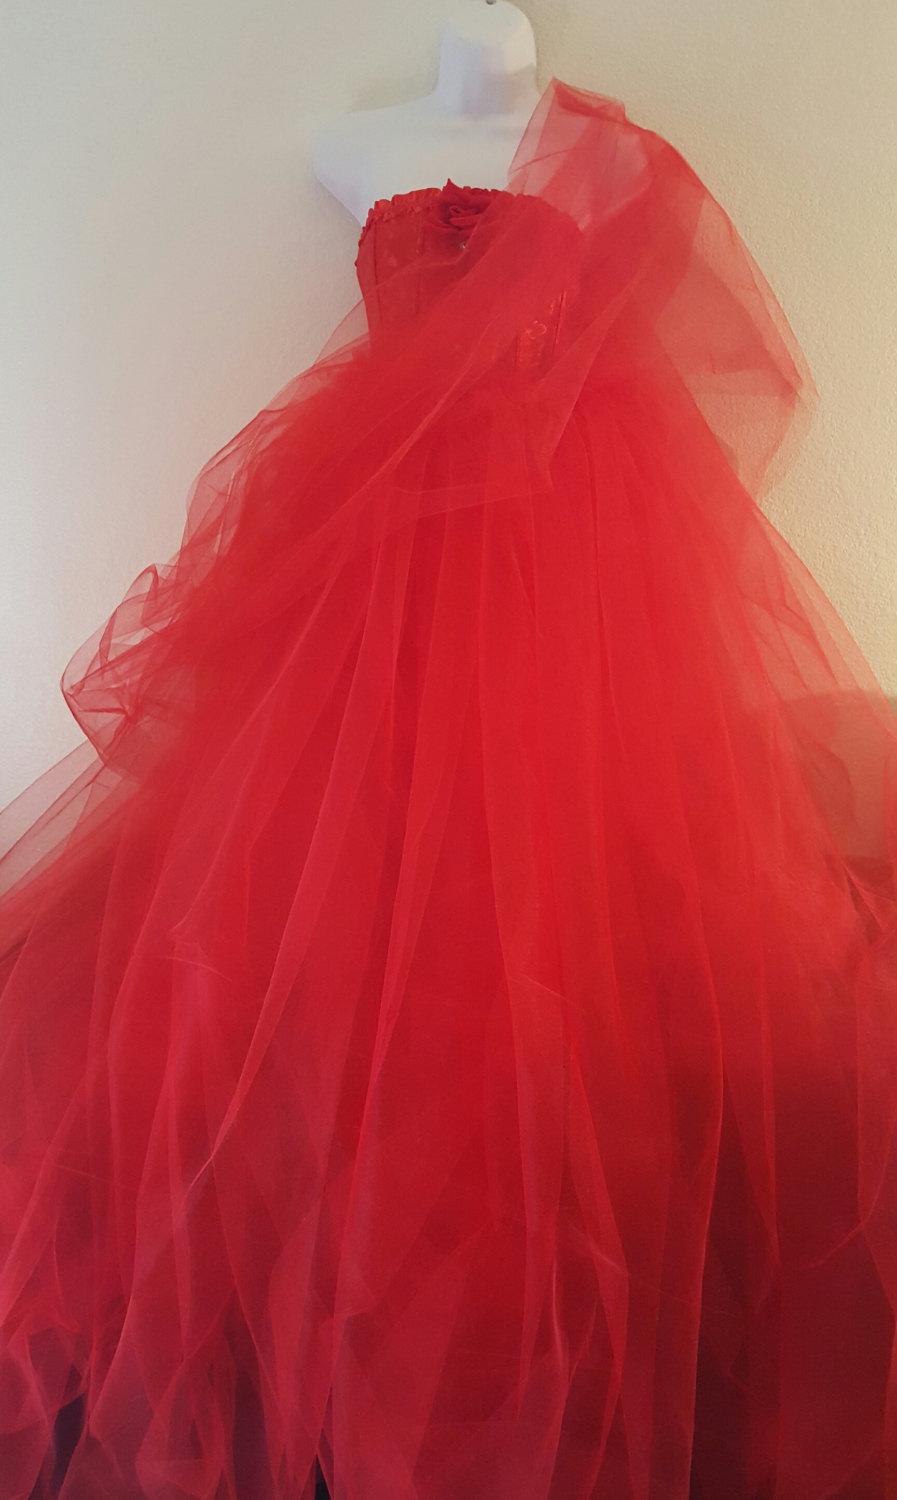 زفاف - Exotic Indian Inspired Red Corset Tulle Sari / Saree Ball Gown Dress Bridal Wedding Gown Party Costume